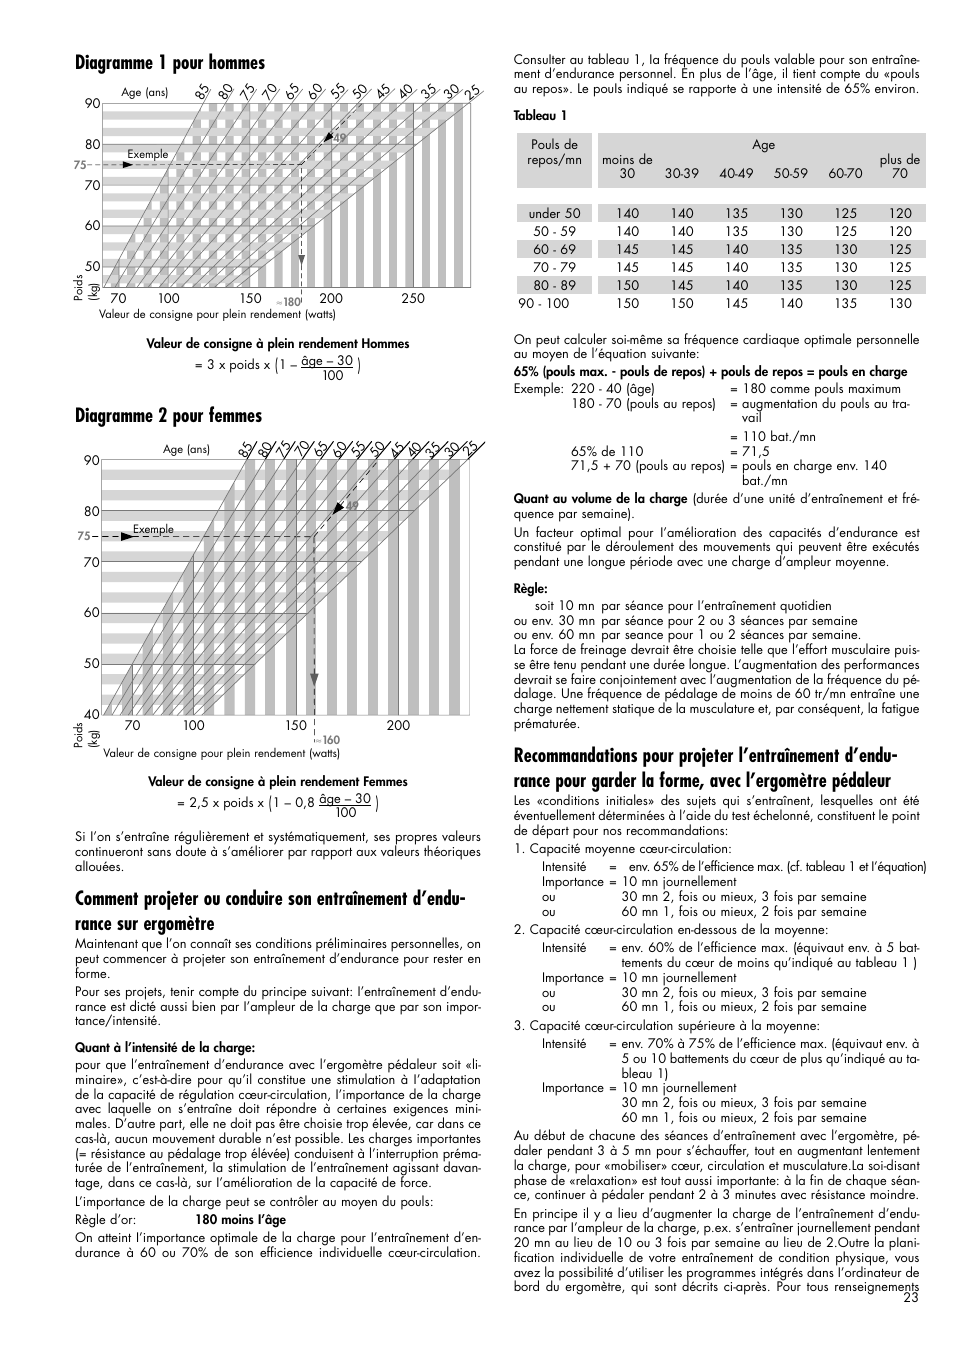 Ansichtkaart Besnoeiing Minder dan Diagramme 1 pour hommes, Diagramme 2 pour femmes | Kettler Ergometer CX 1  User Manual | Page 23 / 34 | Original mode